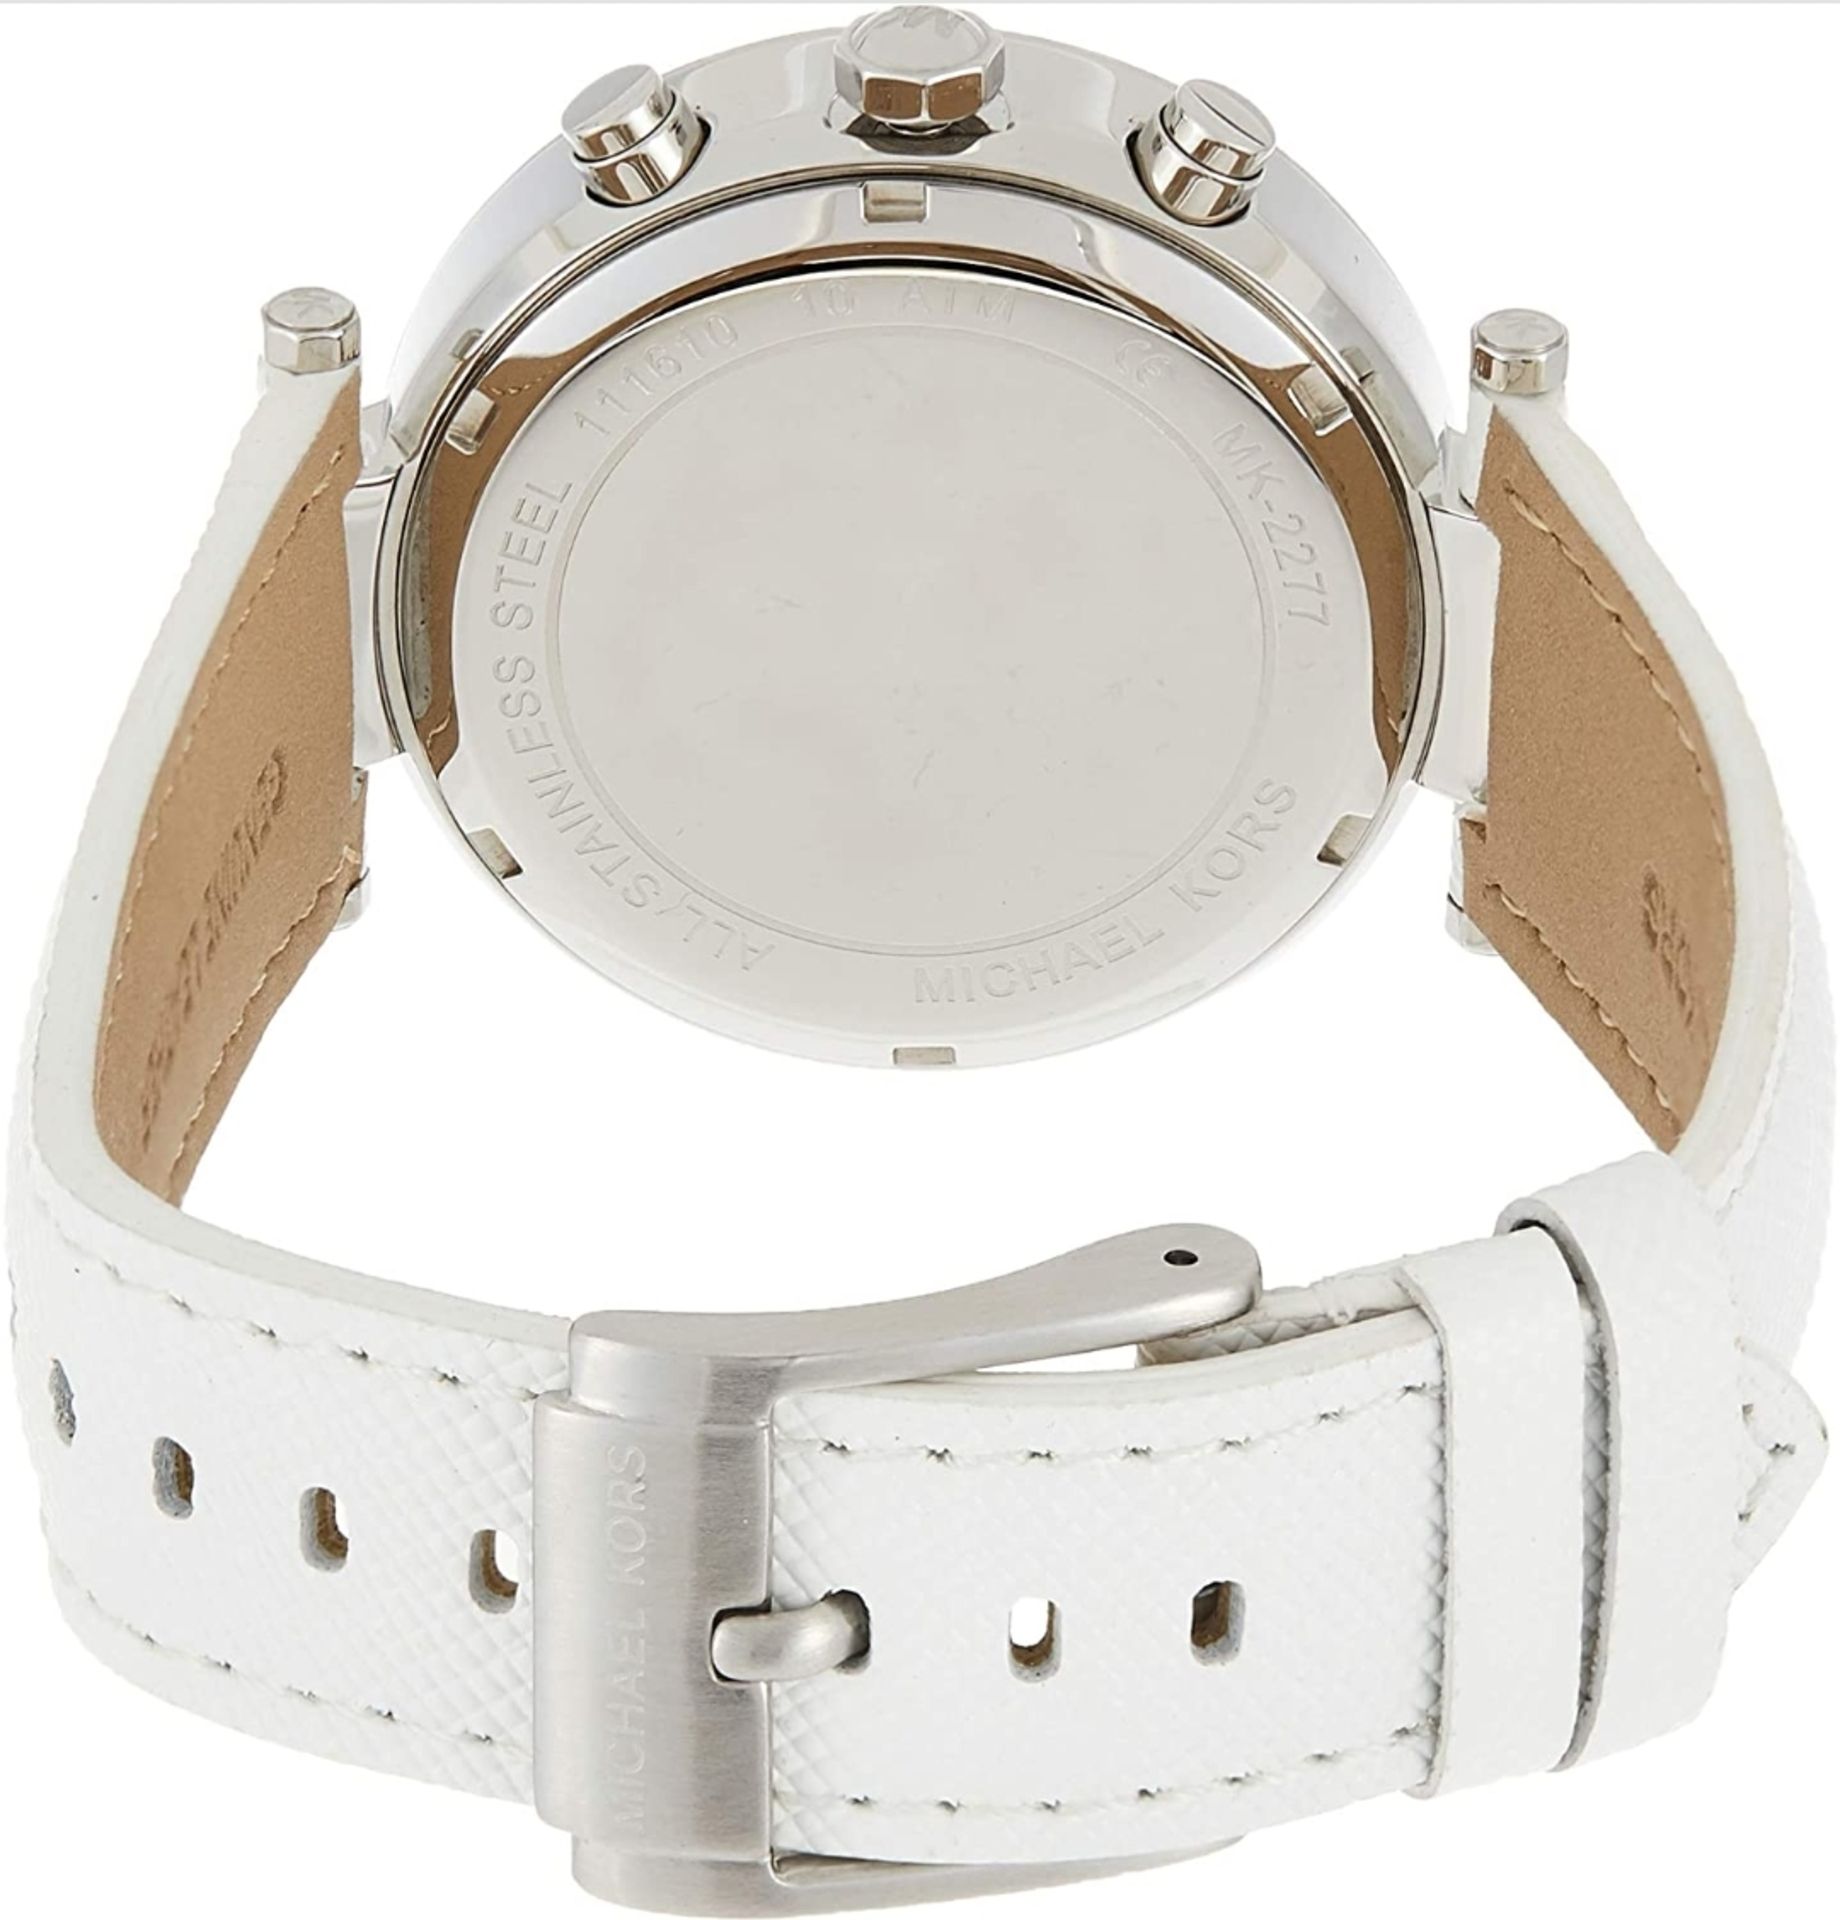 Michael Kors MK2277 Ladies Parker White Leather Strap quartz Chronograph Designer Watch - Image 3 of 8